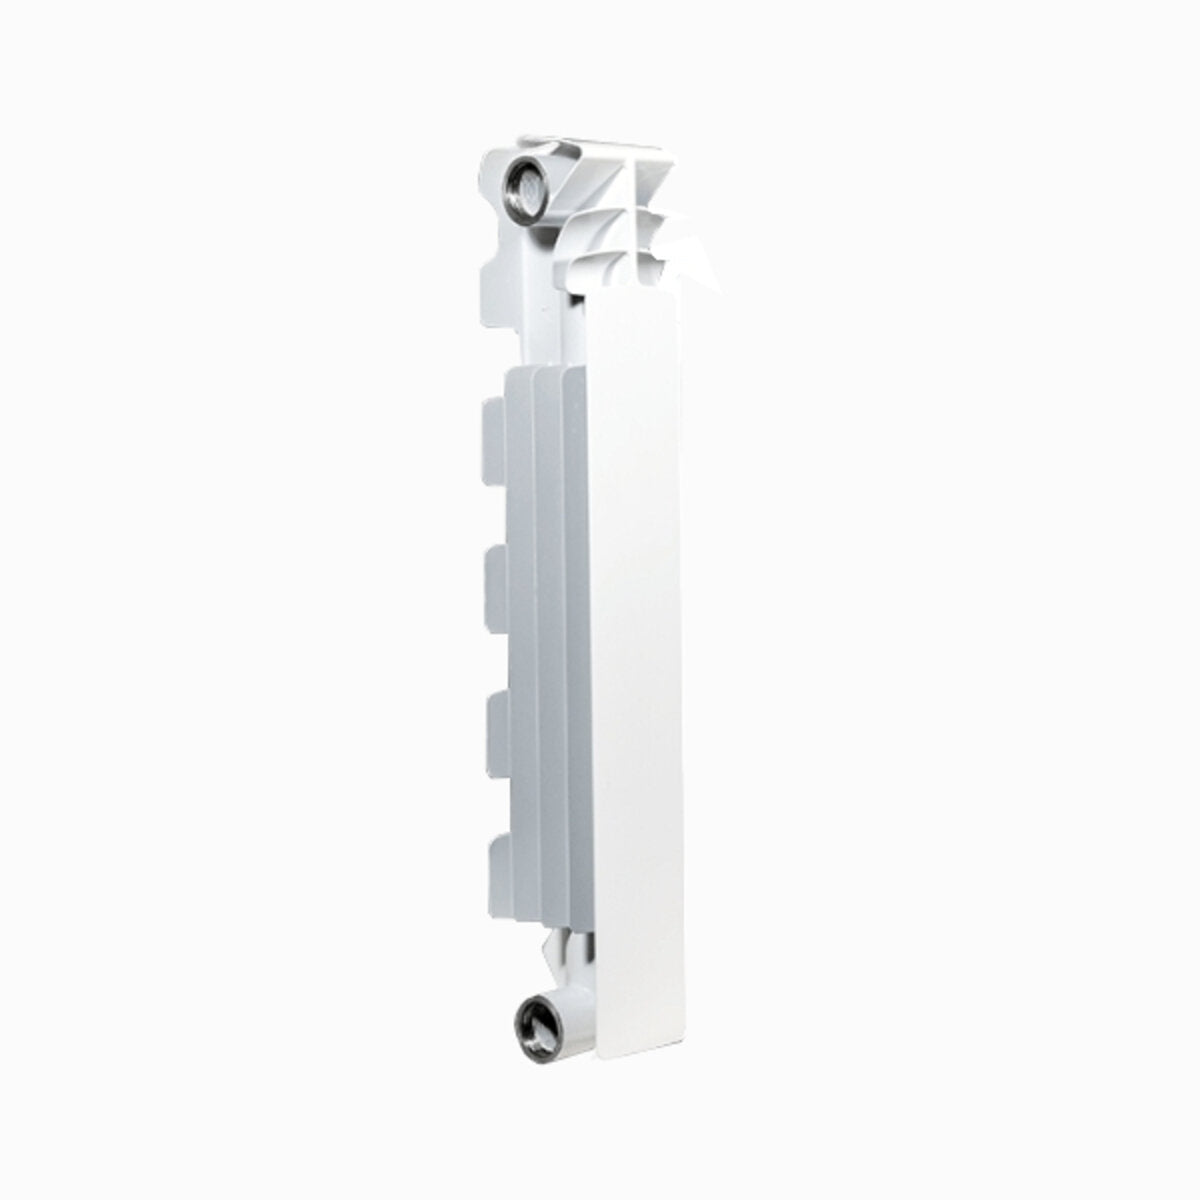 Fondital radiator in die-cast aluminum Exclusivo B3 single element center distance 500 mm